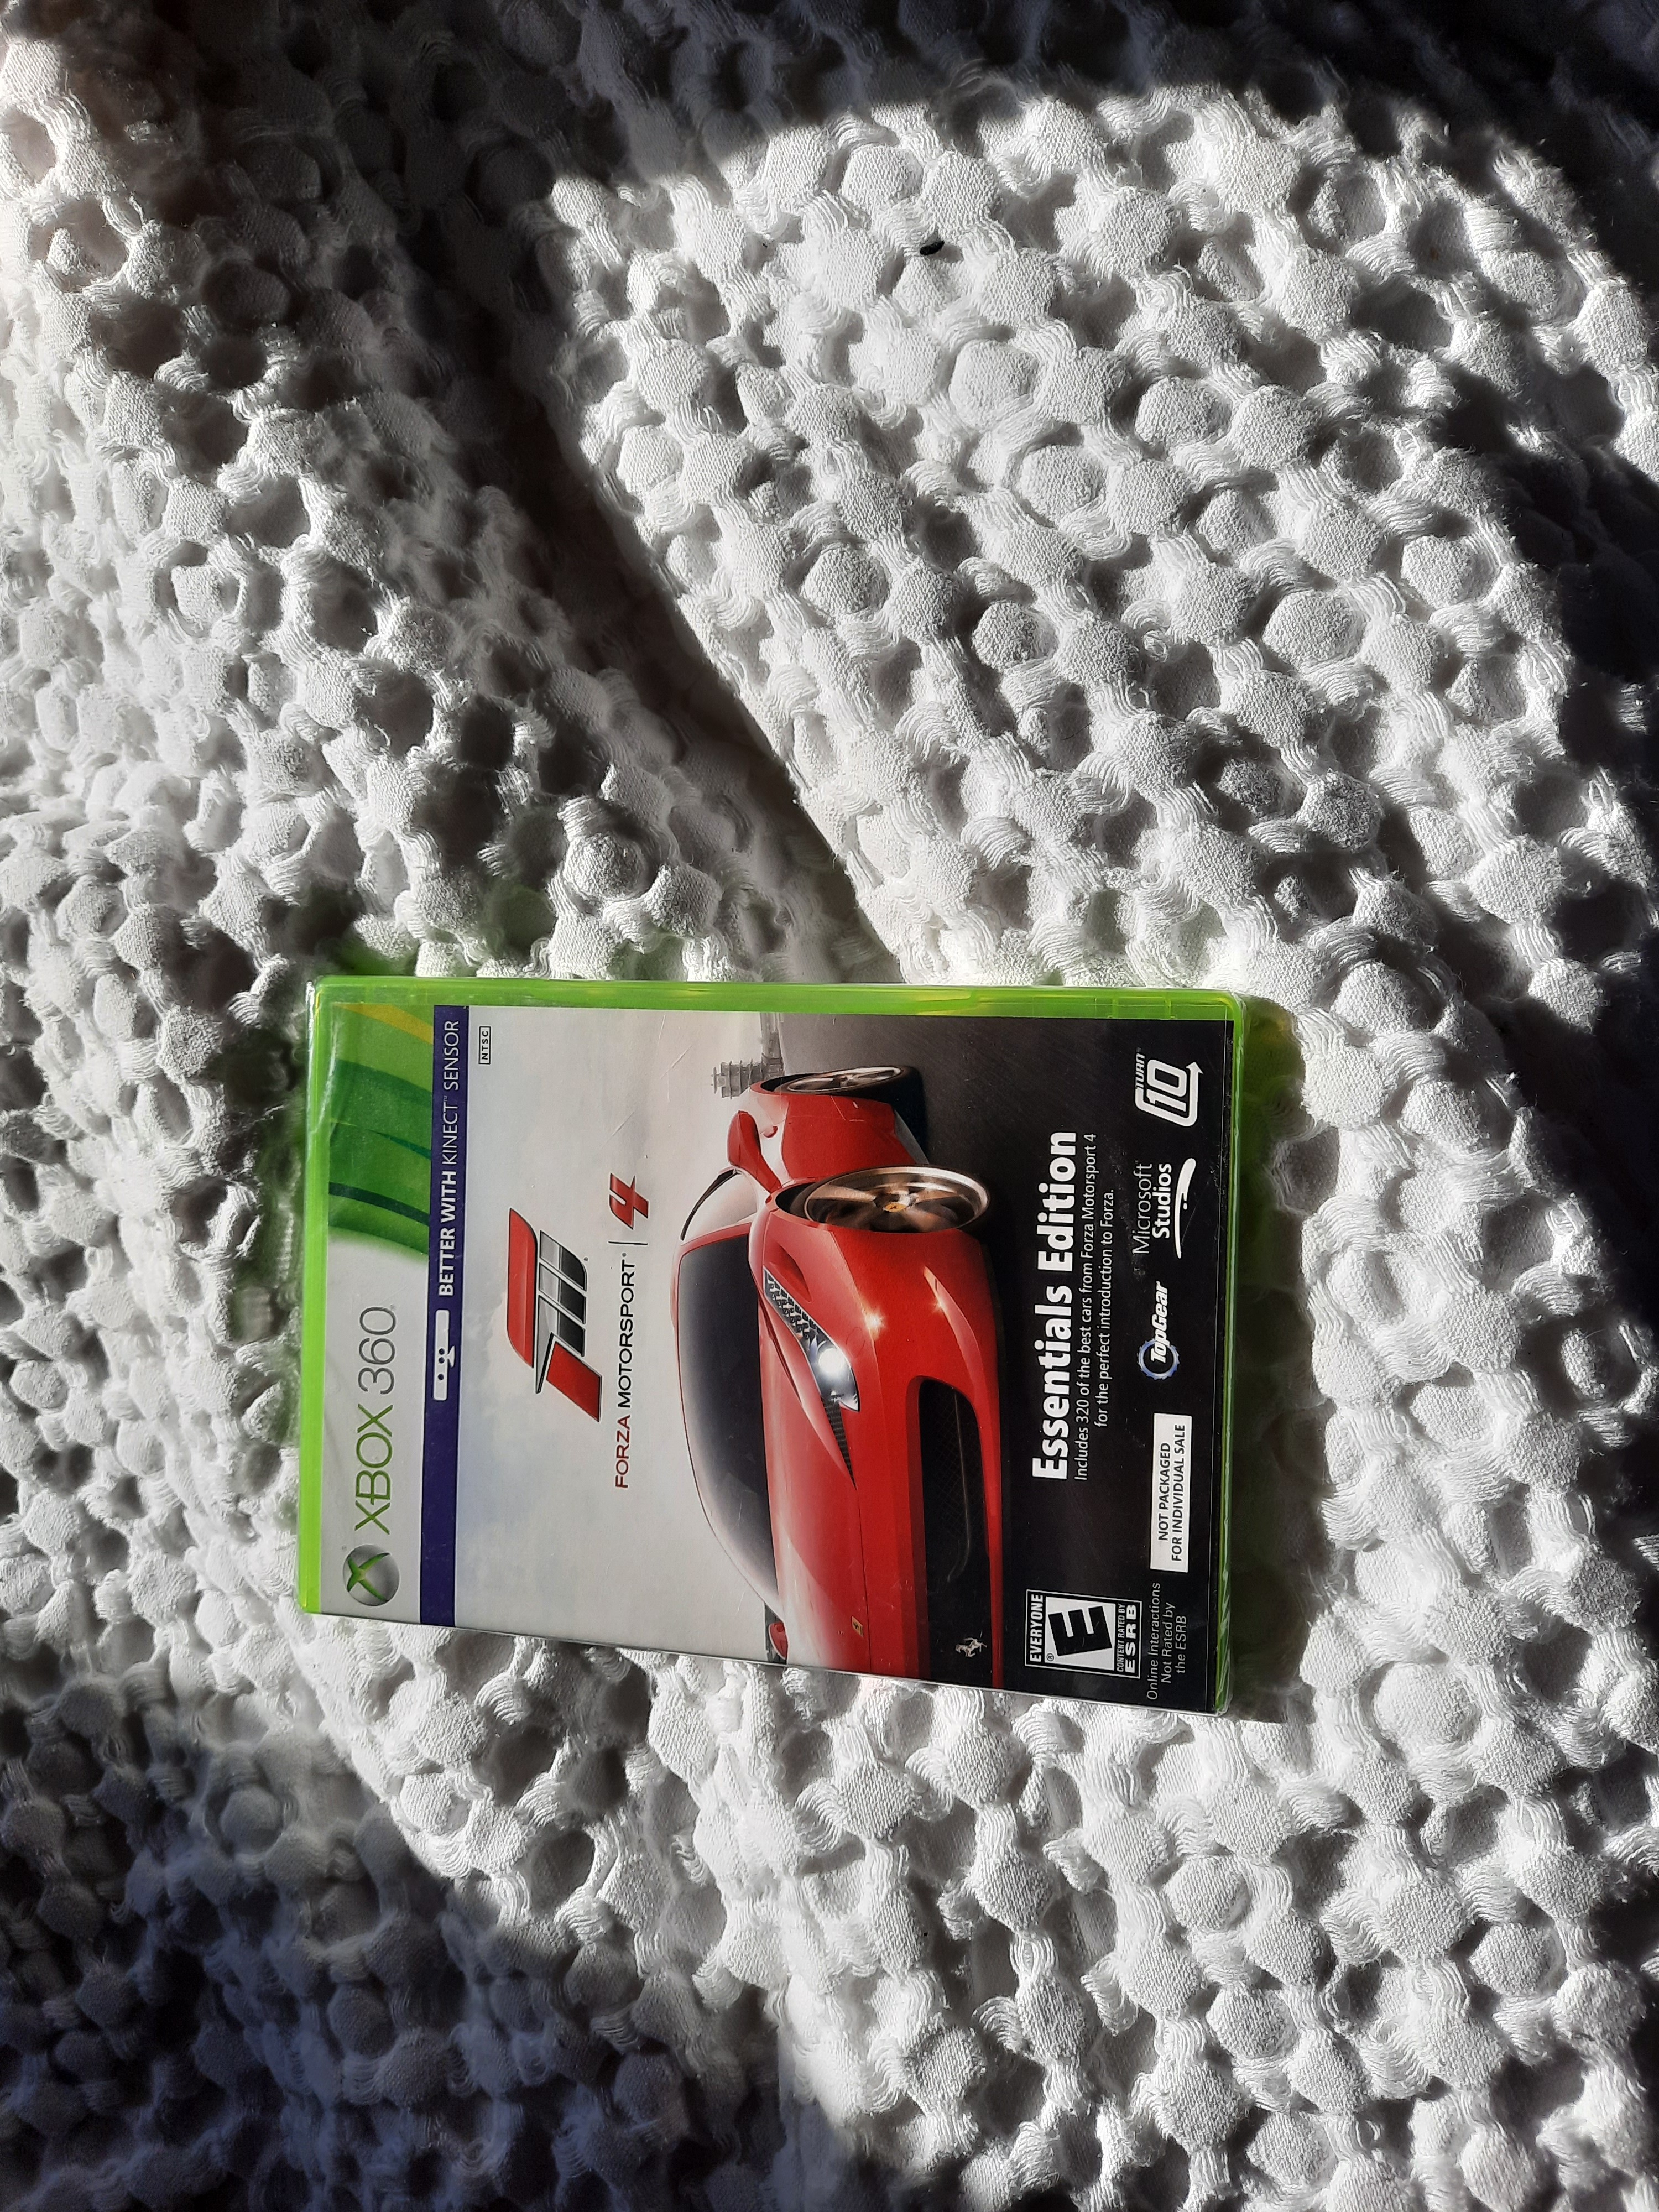 Microsoft Forza Motorsport 4 - Xbox 360 